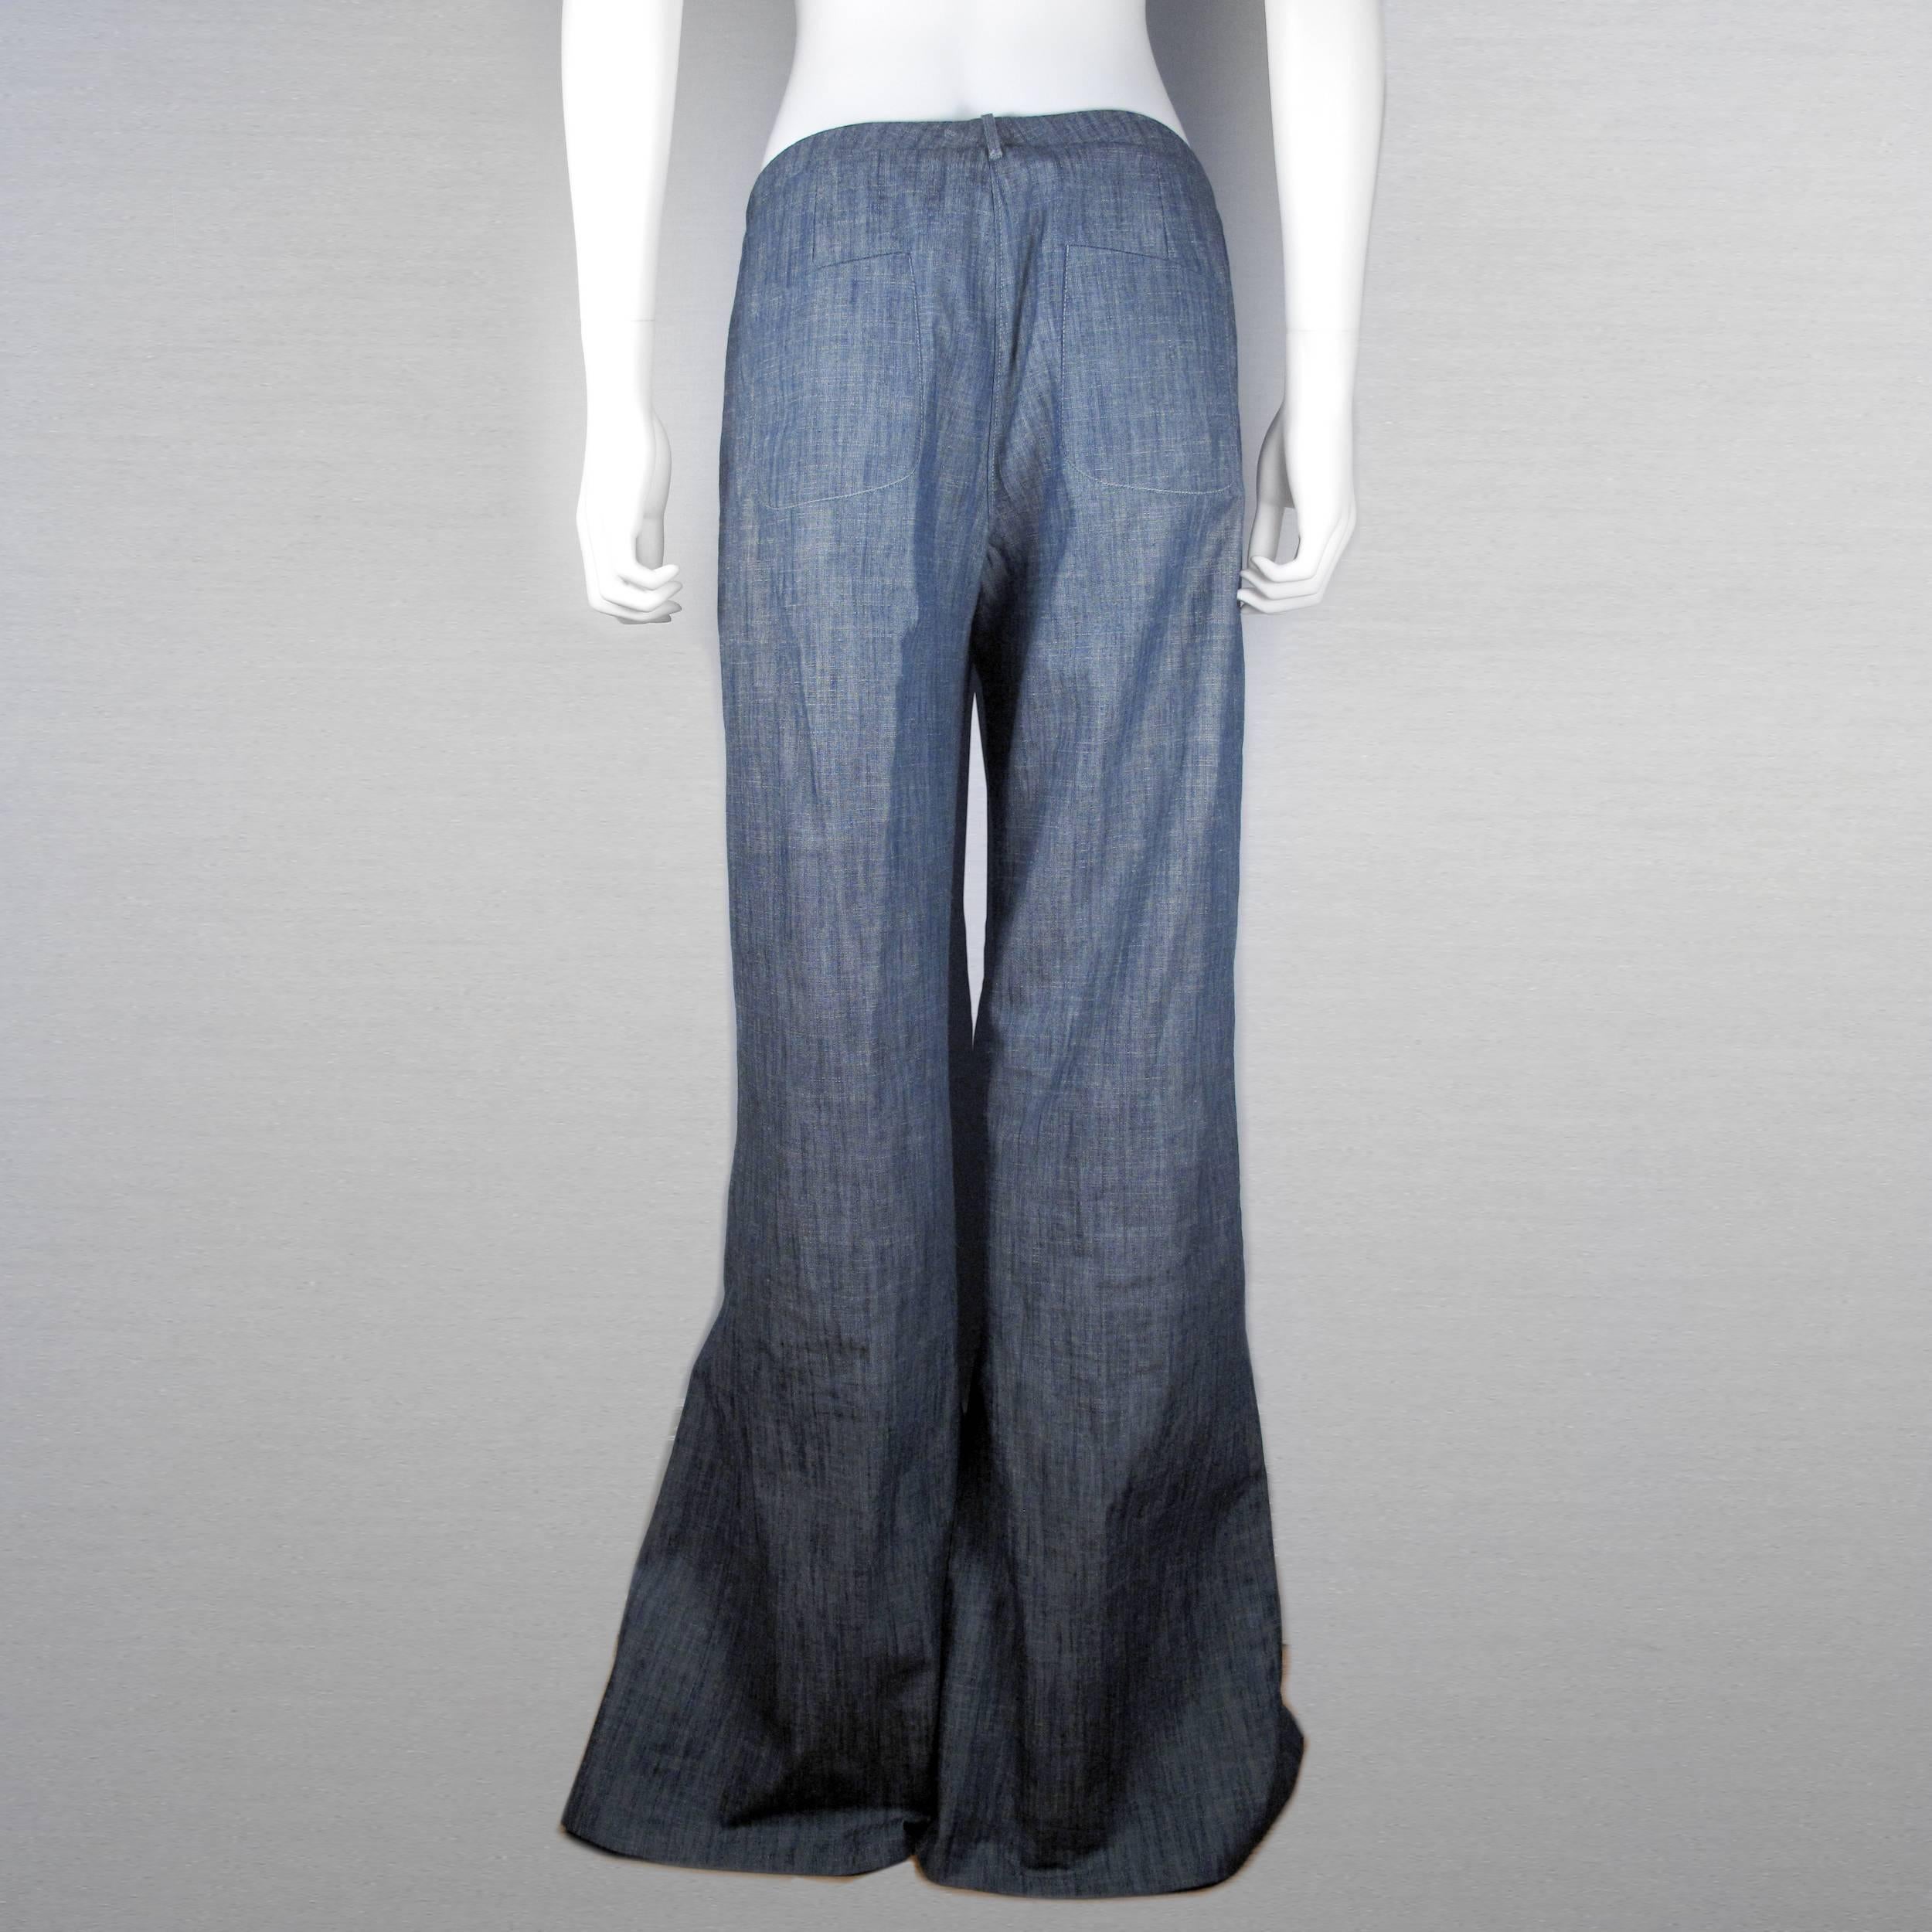 Chanel - Wide Leg Jeans
 
Size: US 8 - 40

Color: Medium Wash

Material: 98% Cotton - 2% Spandex

------------------------------------------------------------

Details:

- wide leg flare jeans

- silver tone hardware

- cc logo at